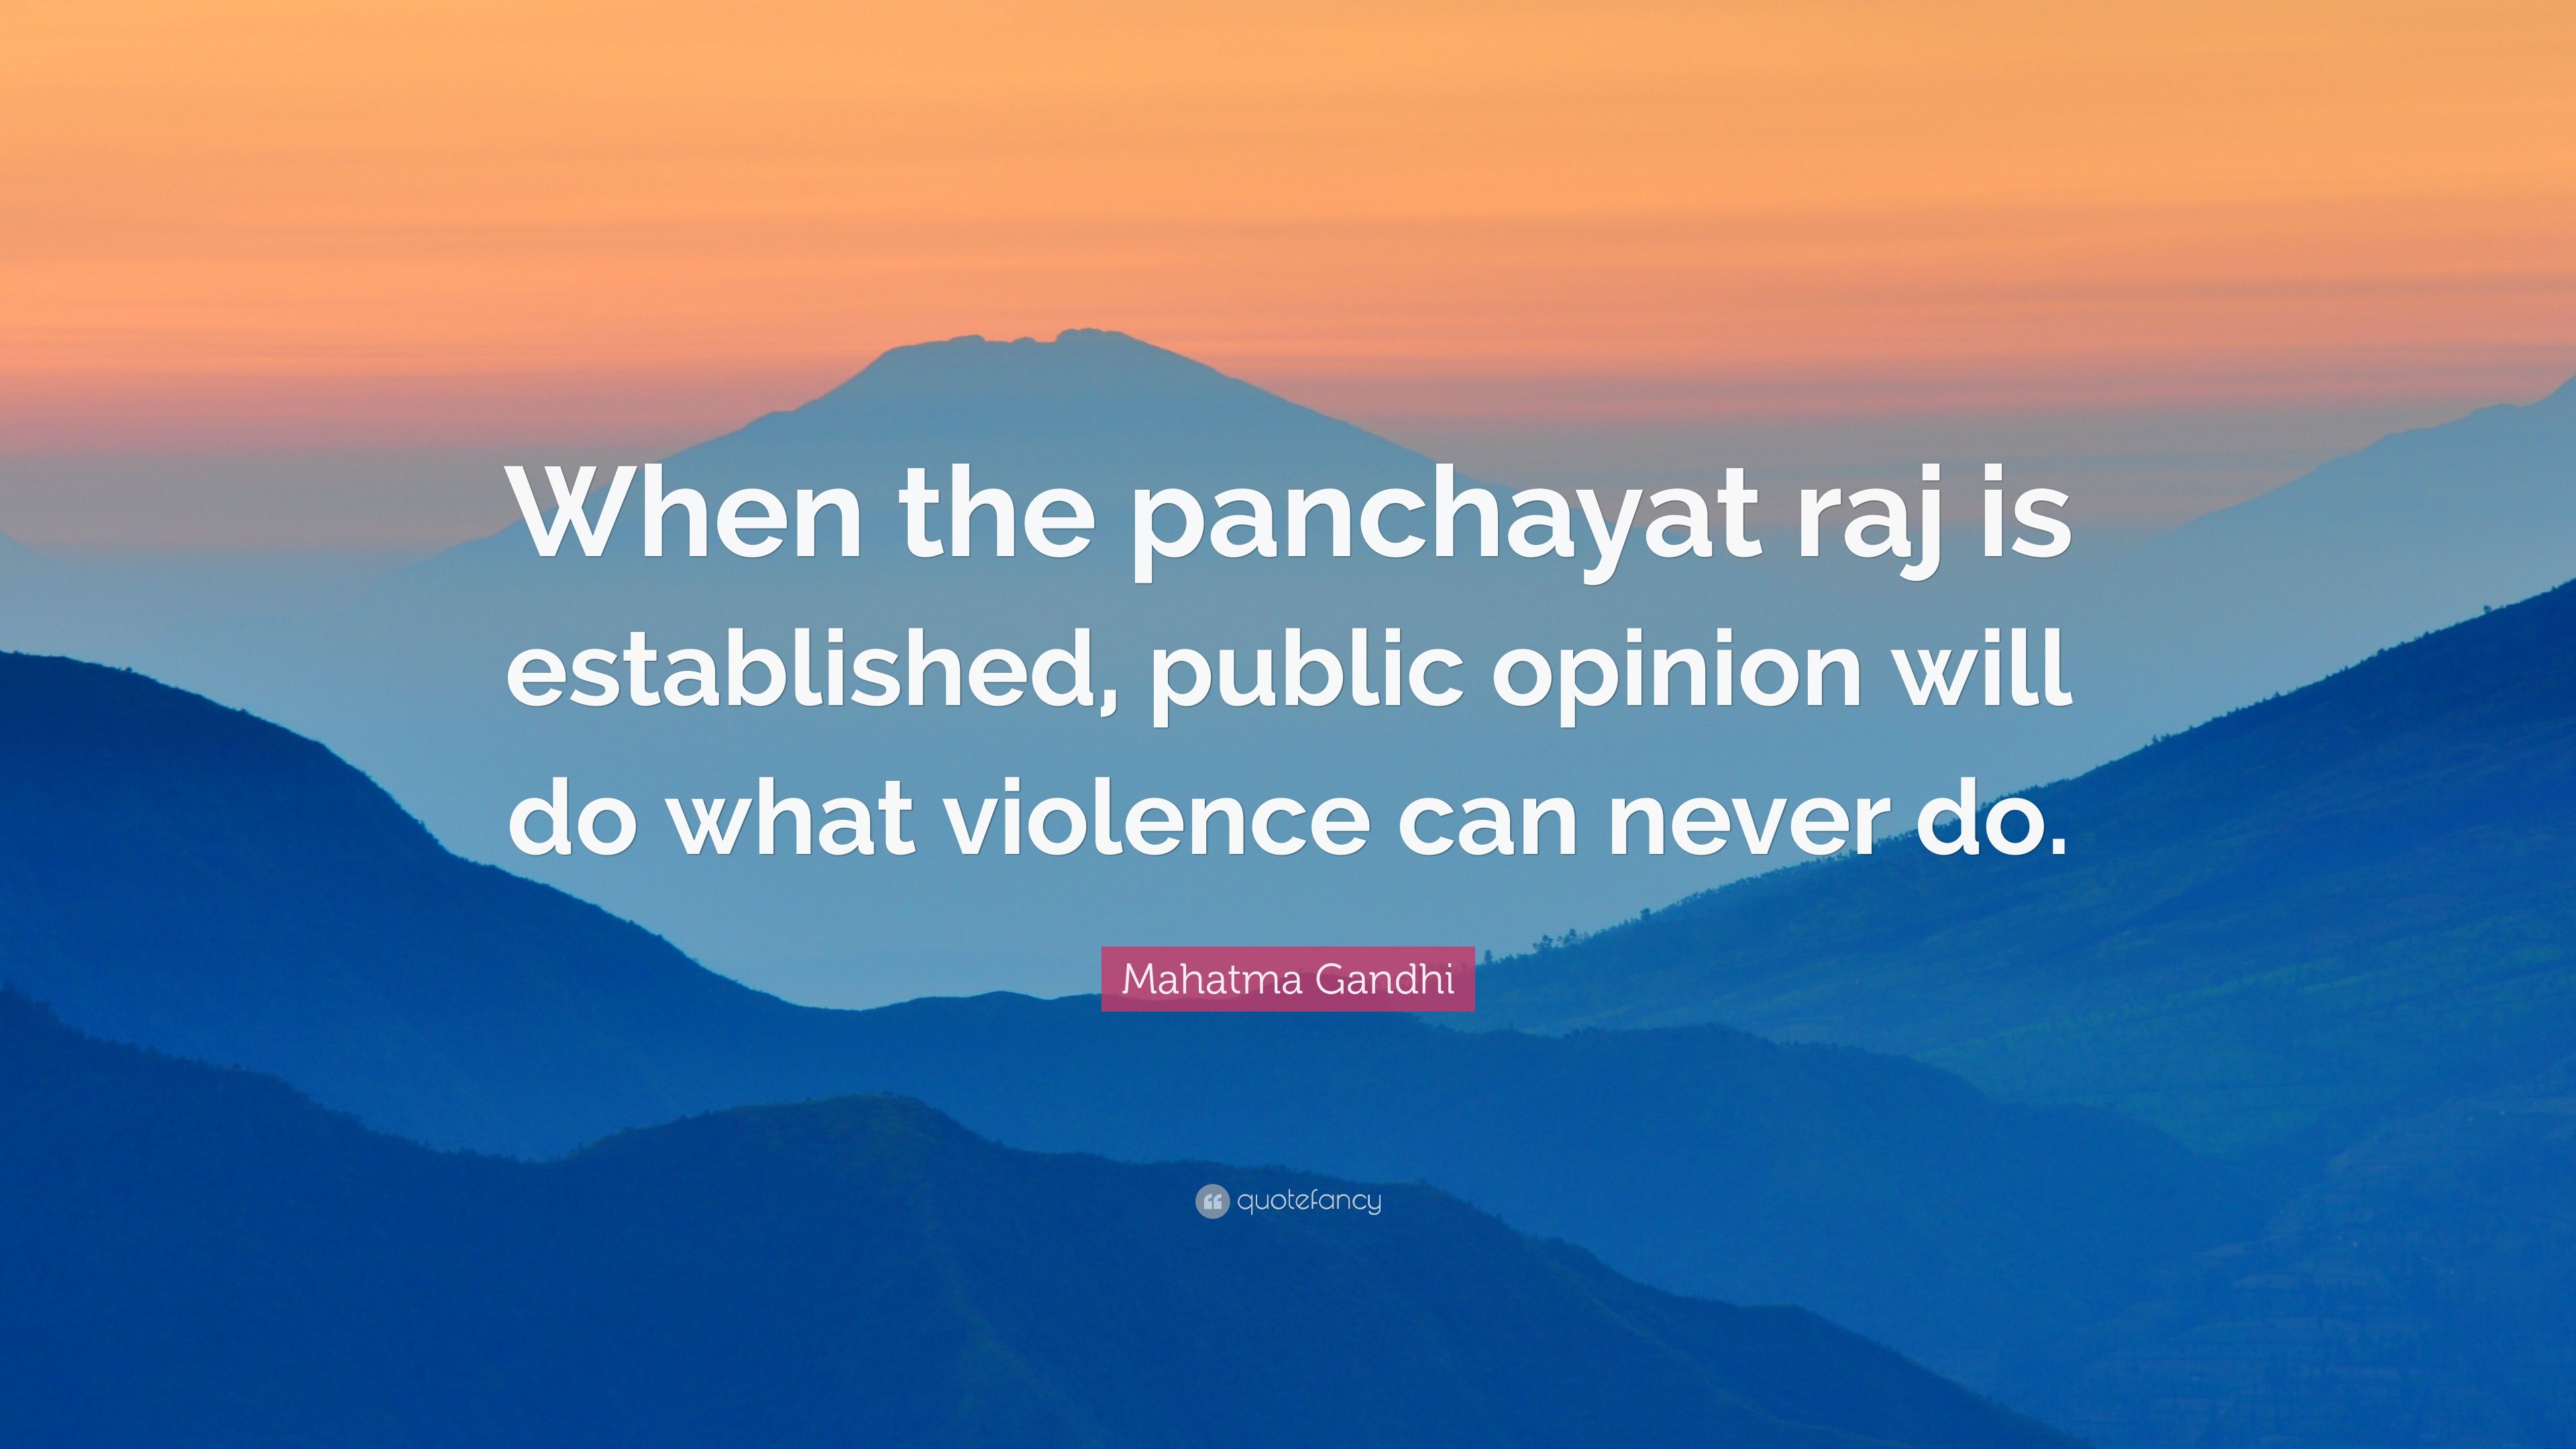 Mahatma Gandhi Quote: “When the panchayat raj is established